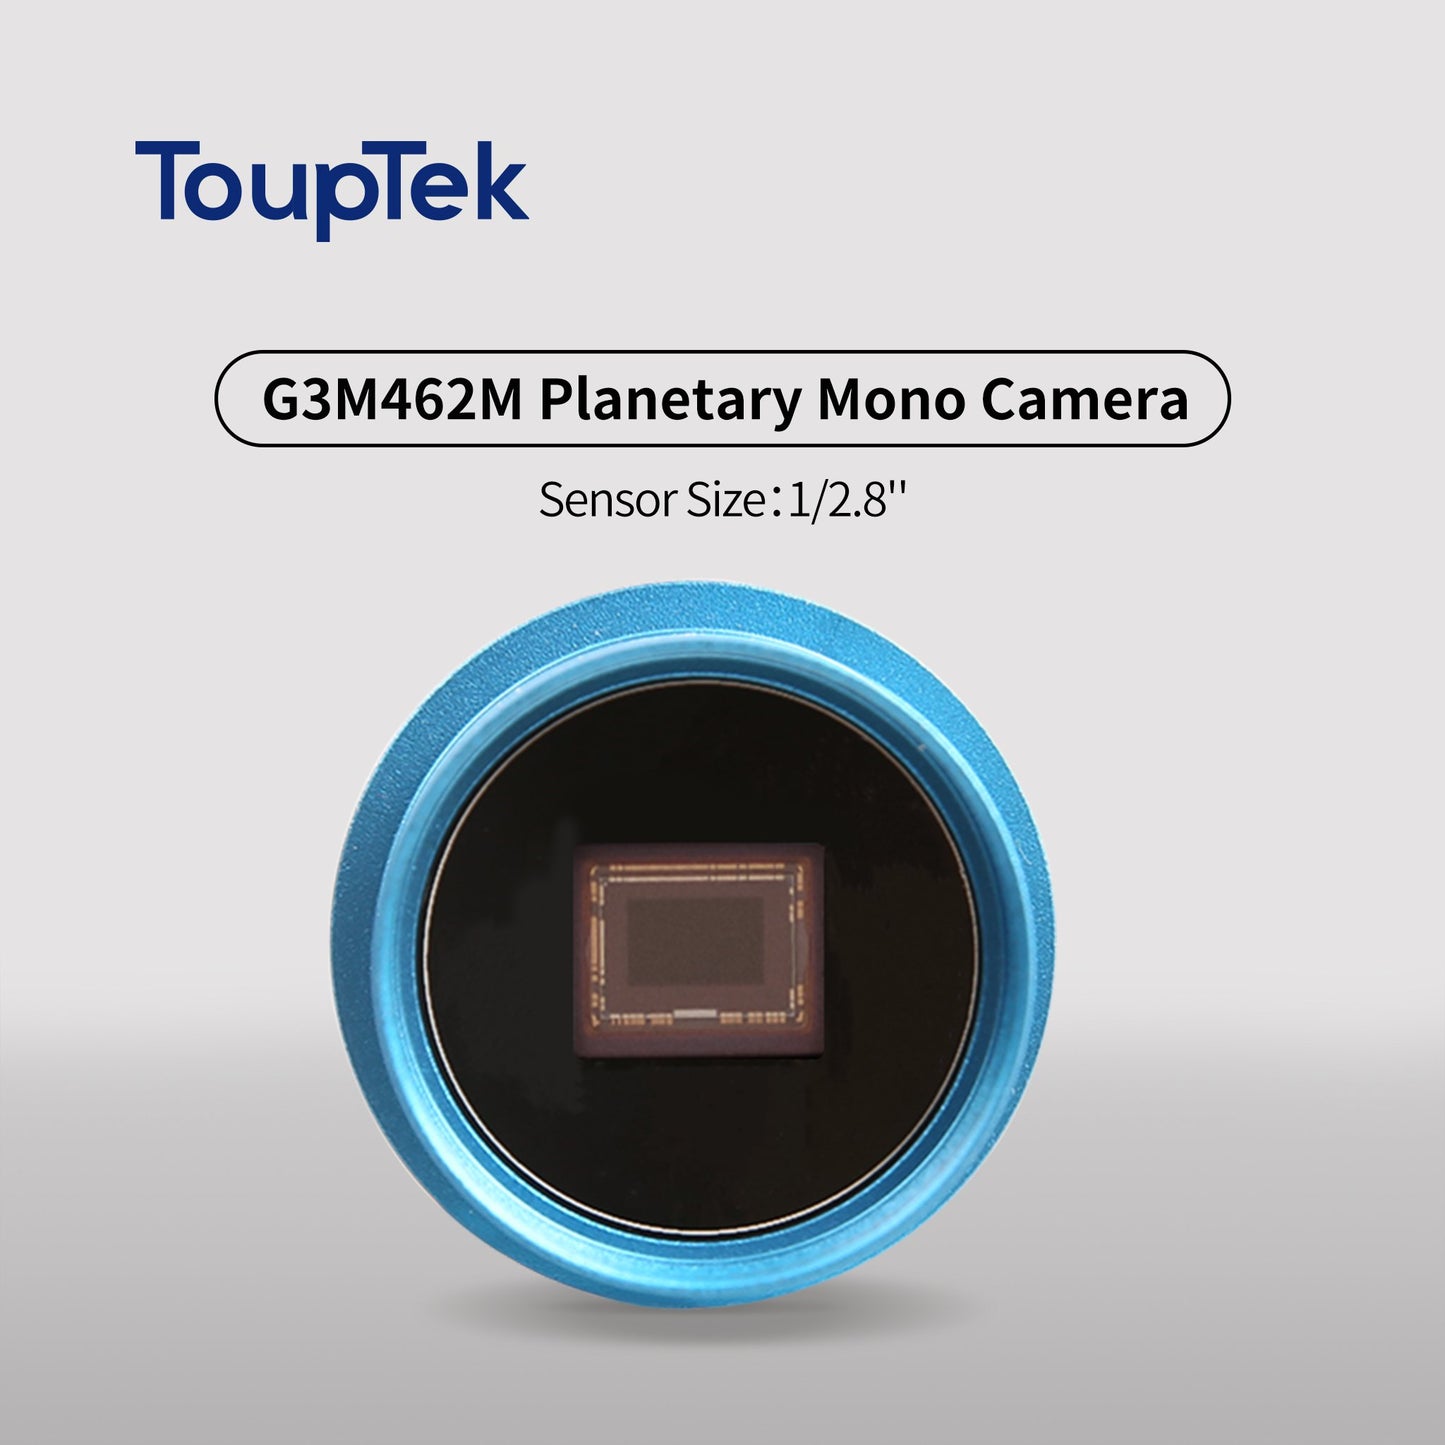 G3M462M Planetary Mono Camera